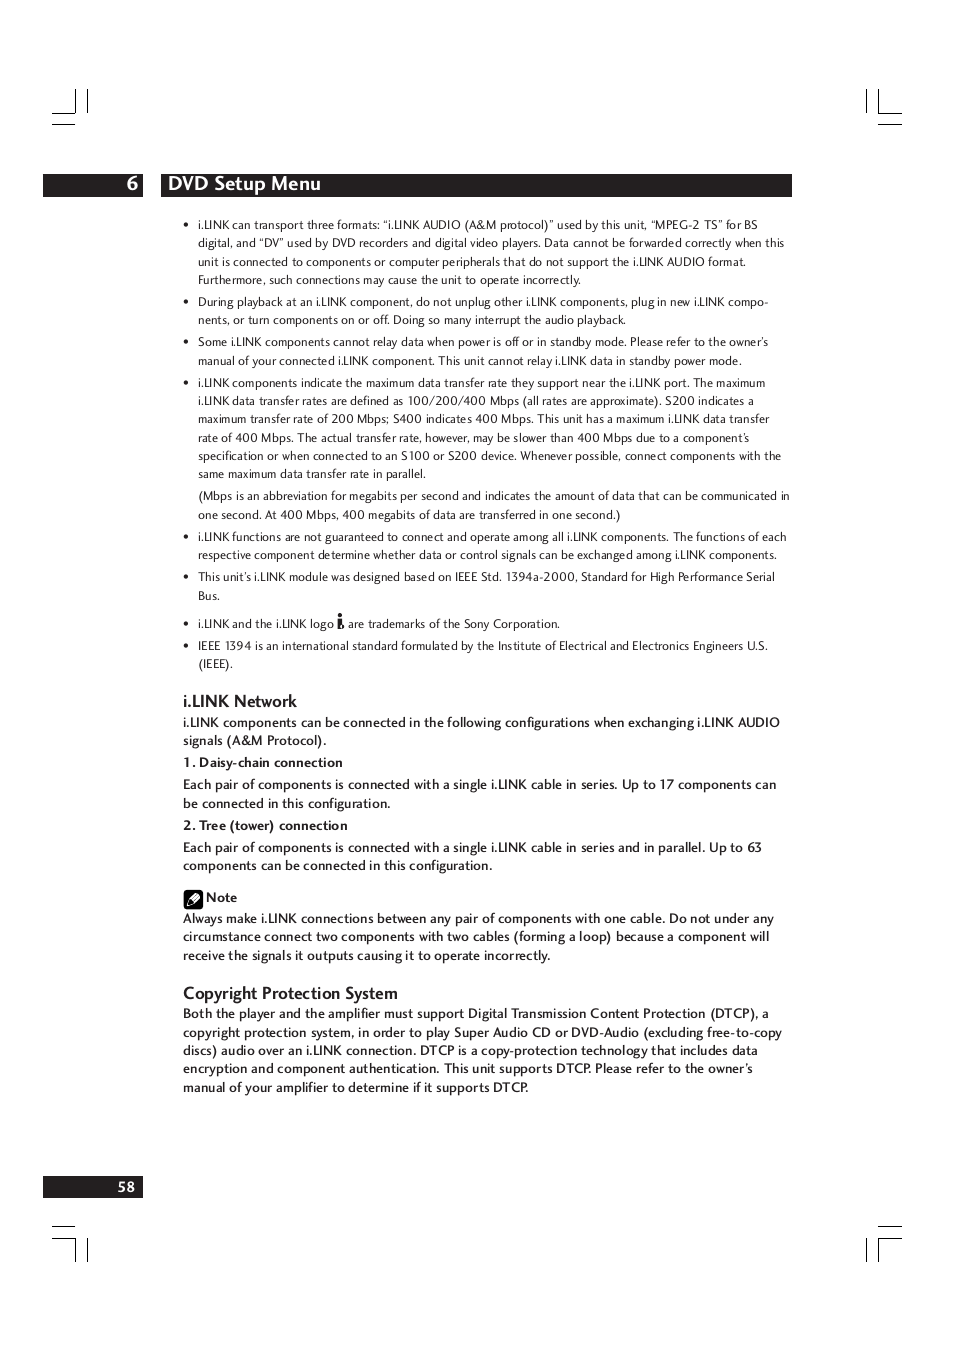 Dvd setup menu 6, I.link network, Copyright protection system | Marantz DV9600 User Manual | Page 58 / 68